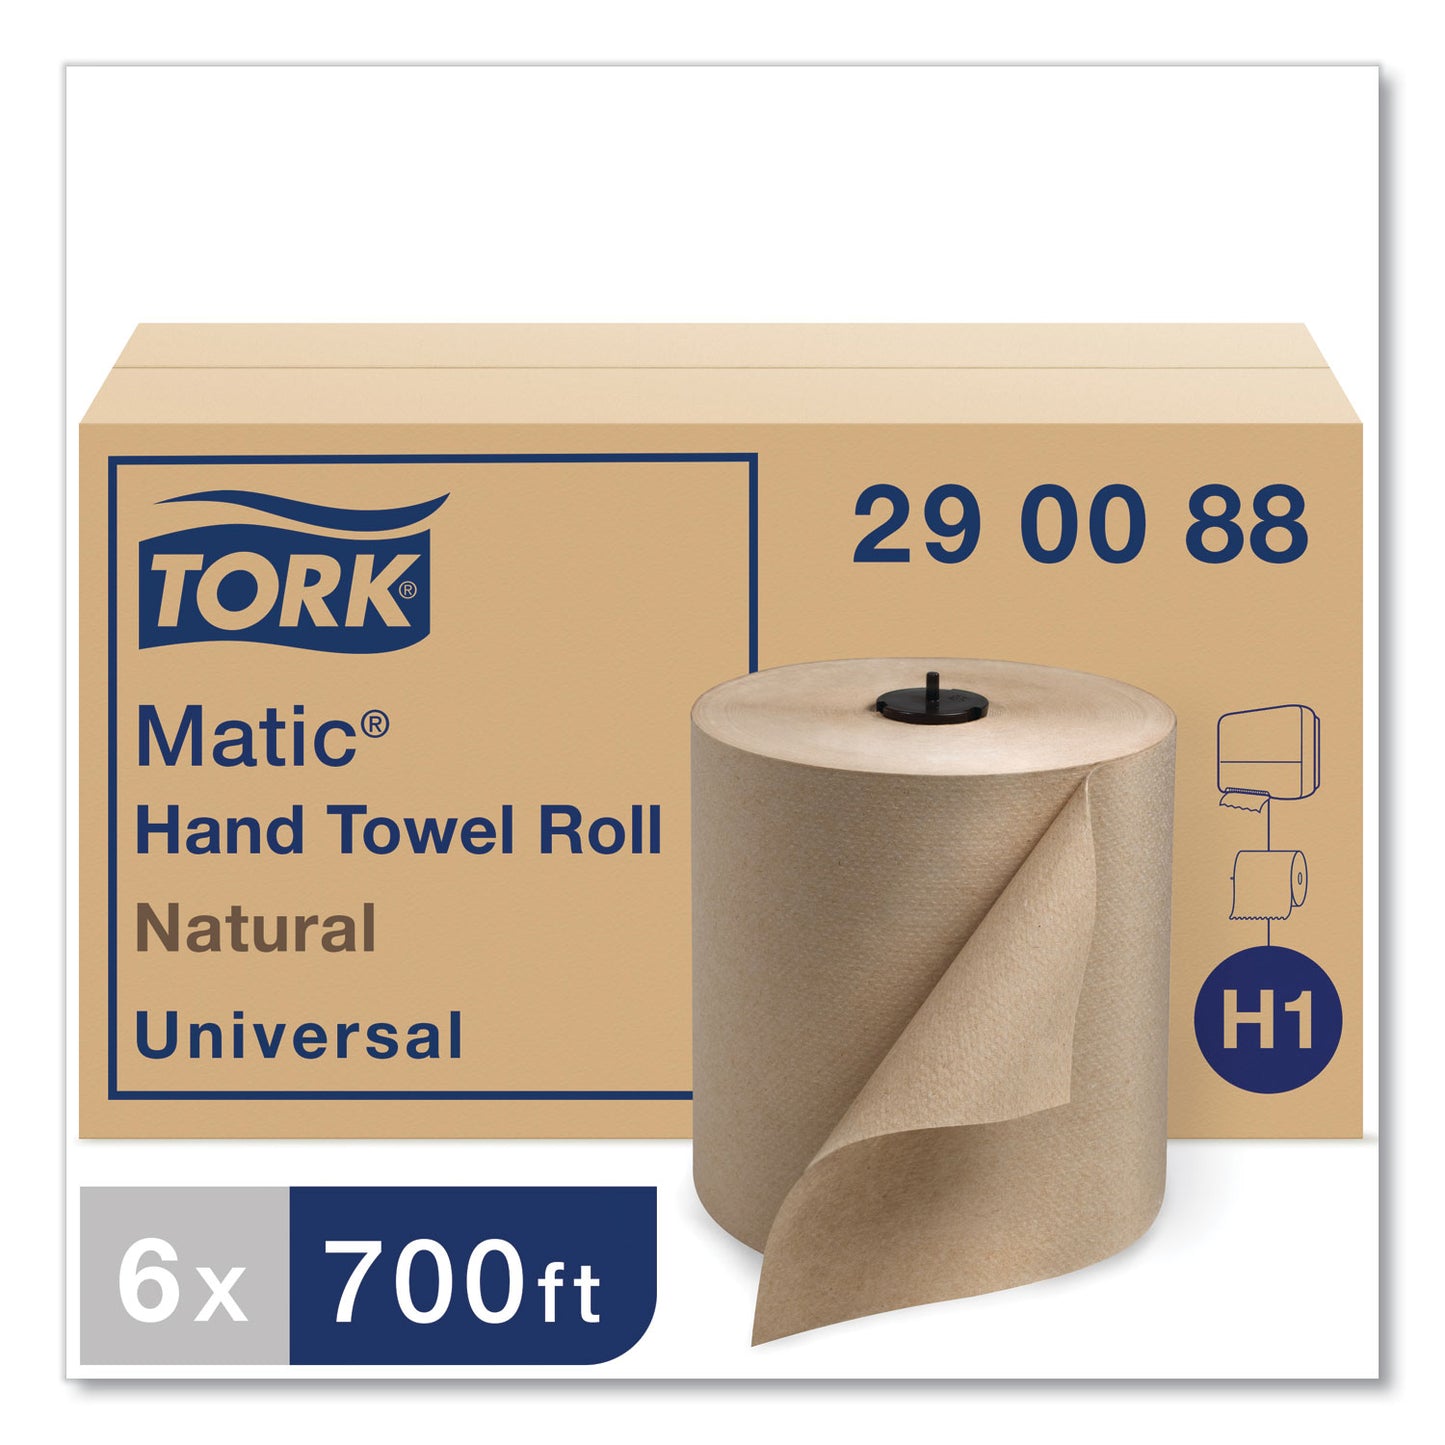 Tork Matic 8" Hand Towel Rolls